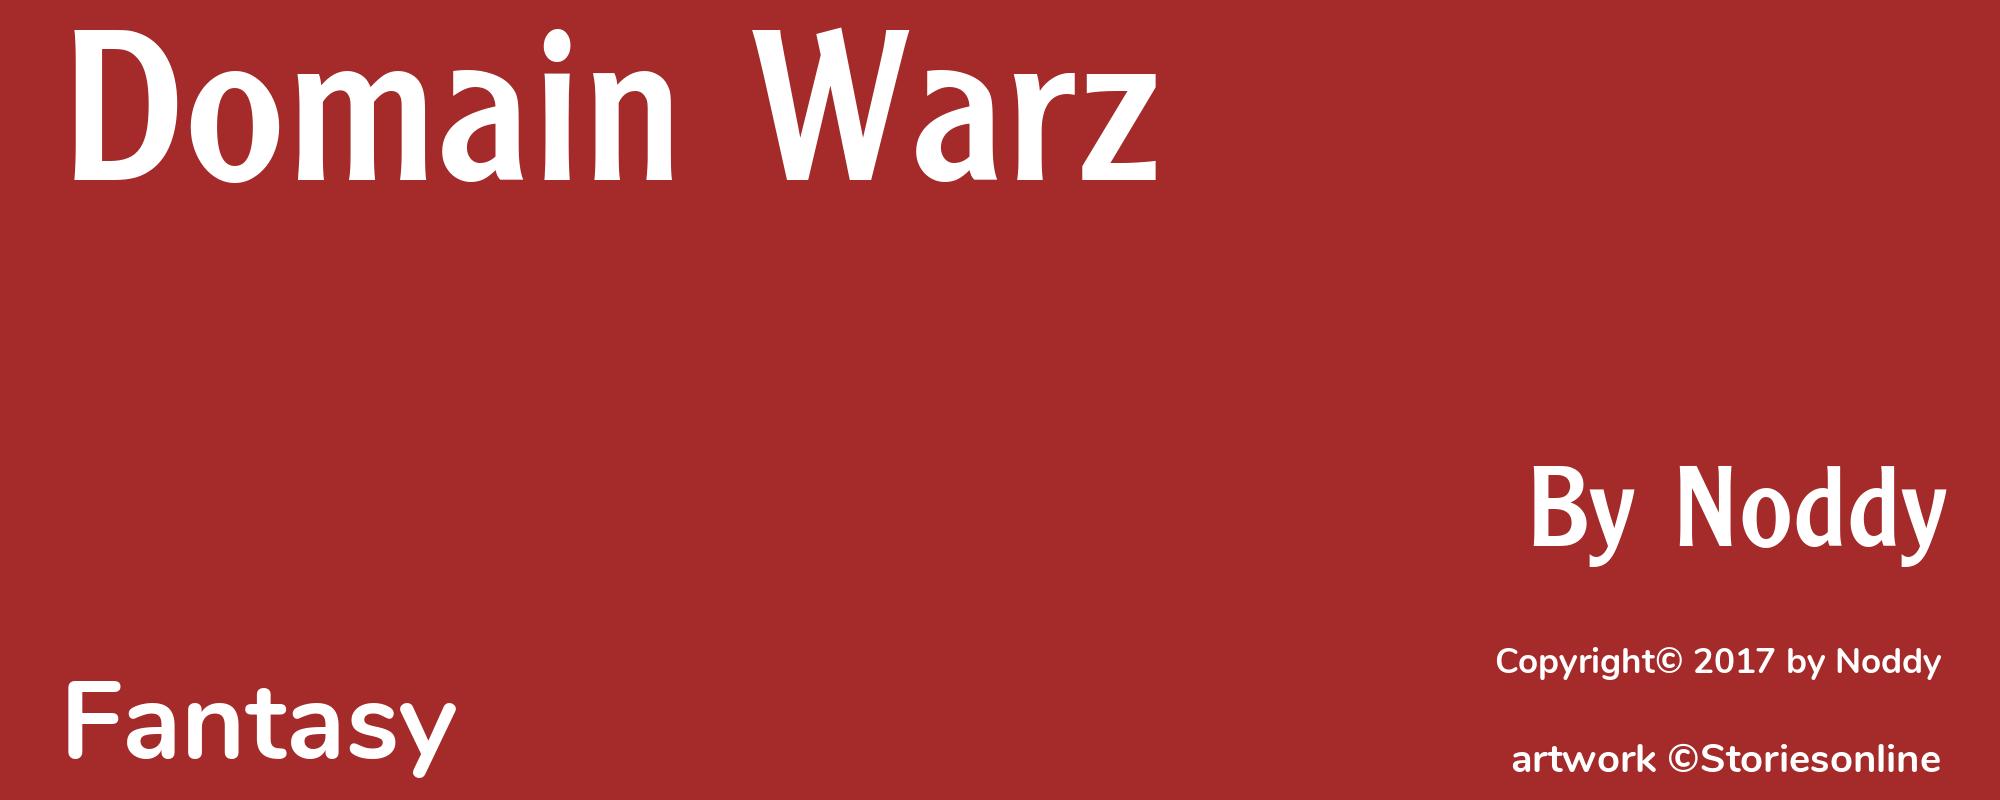 Domain Warz - Cover